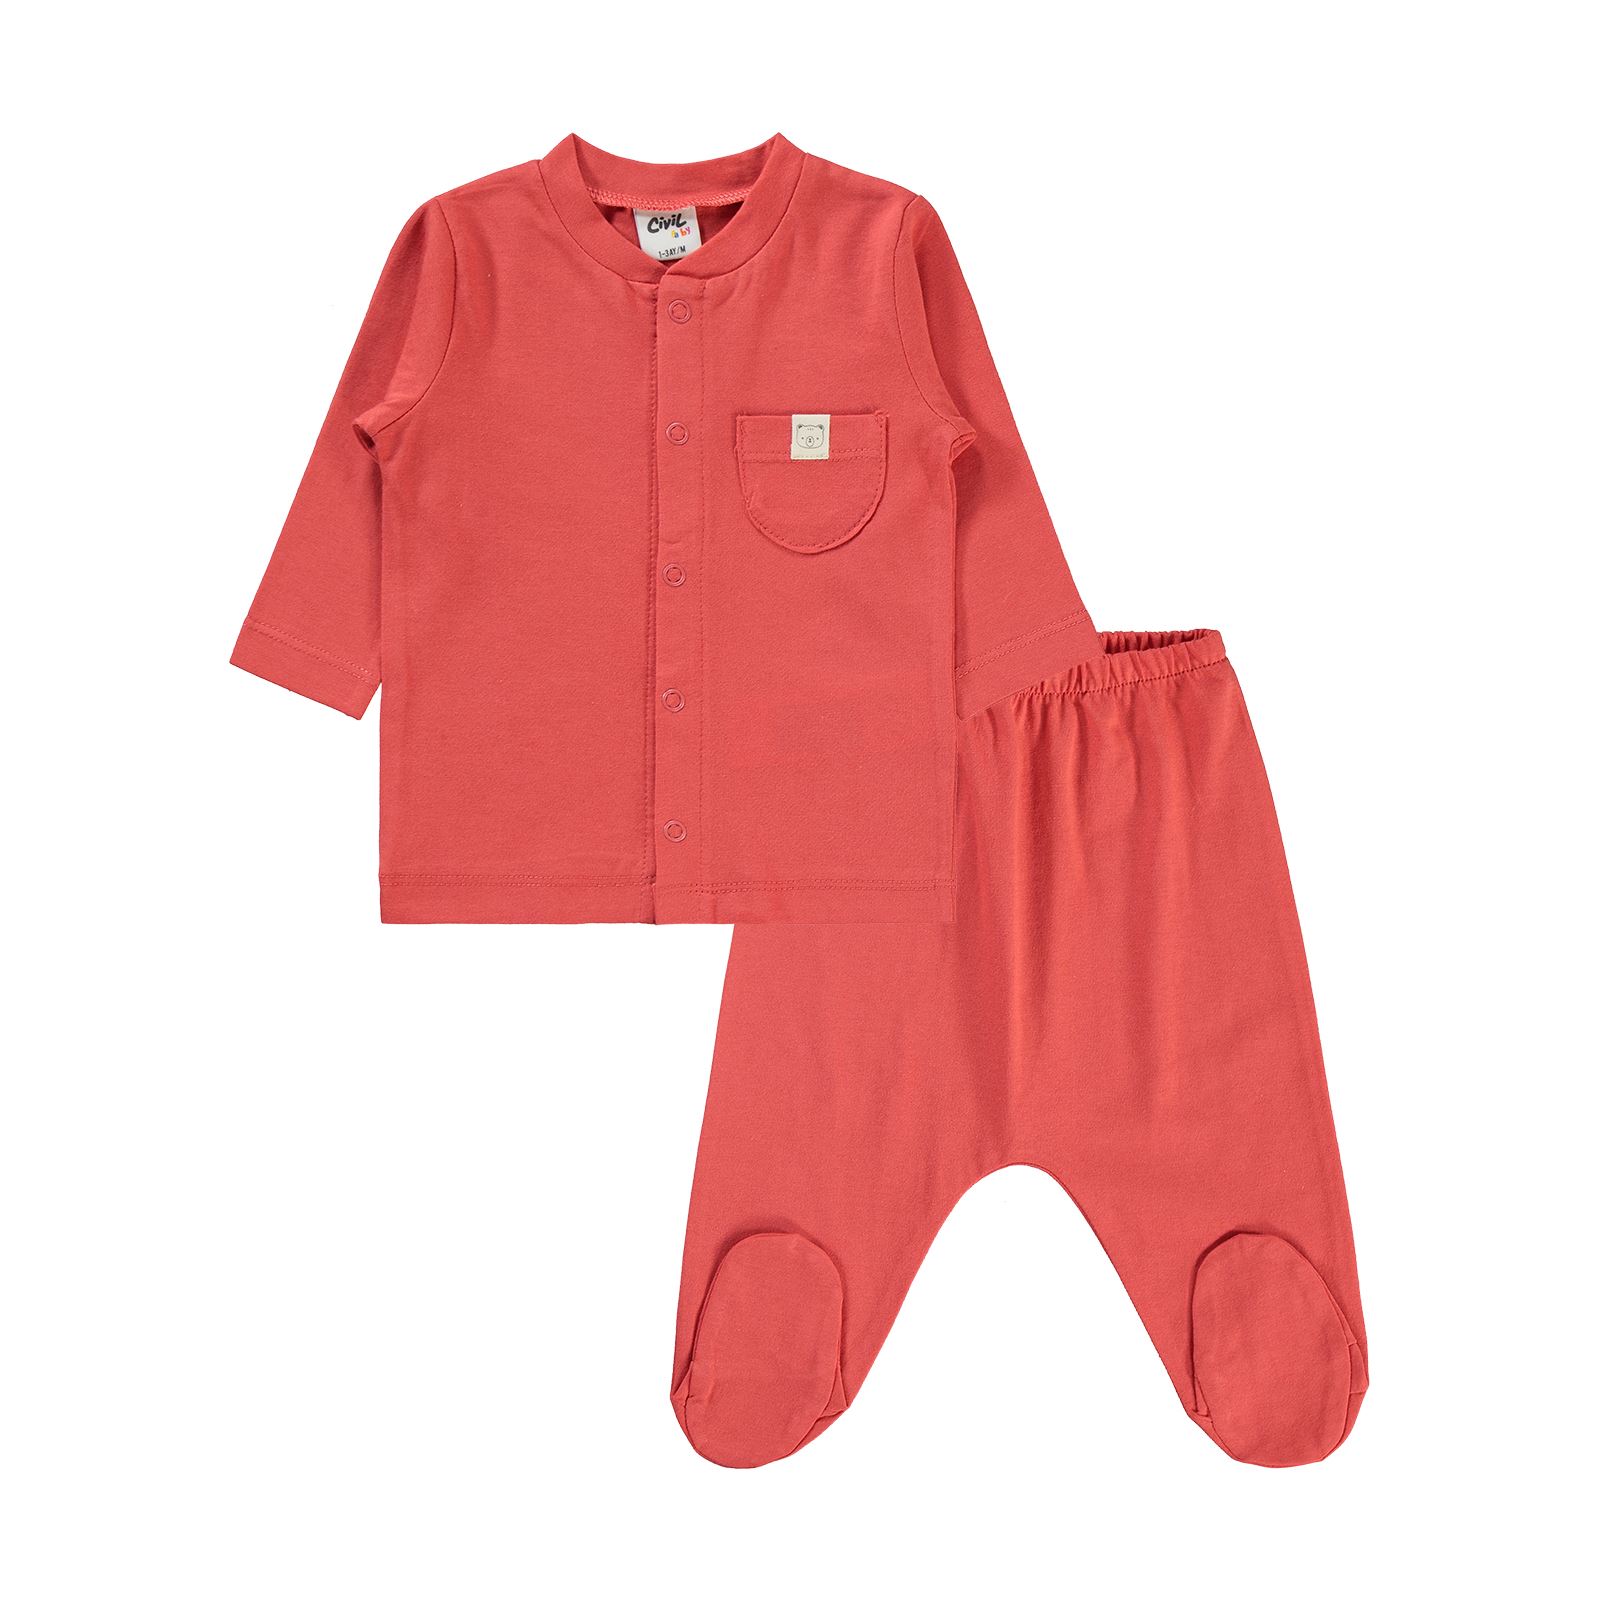 Civil Baby Bebek Pijama Takımı 1-6 Ay Narçiçeği